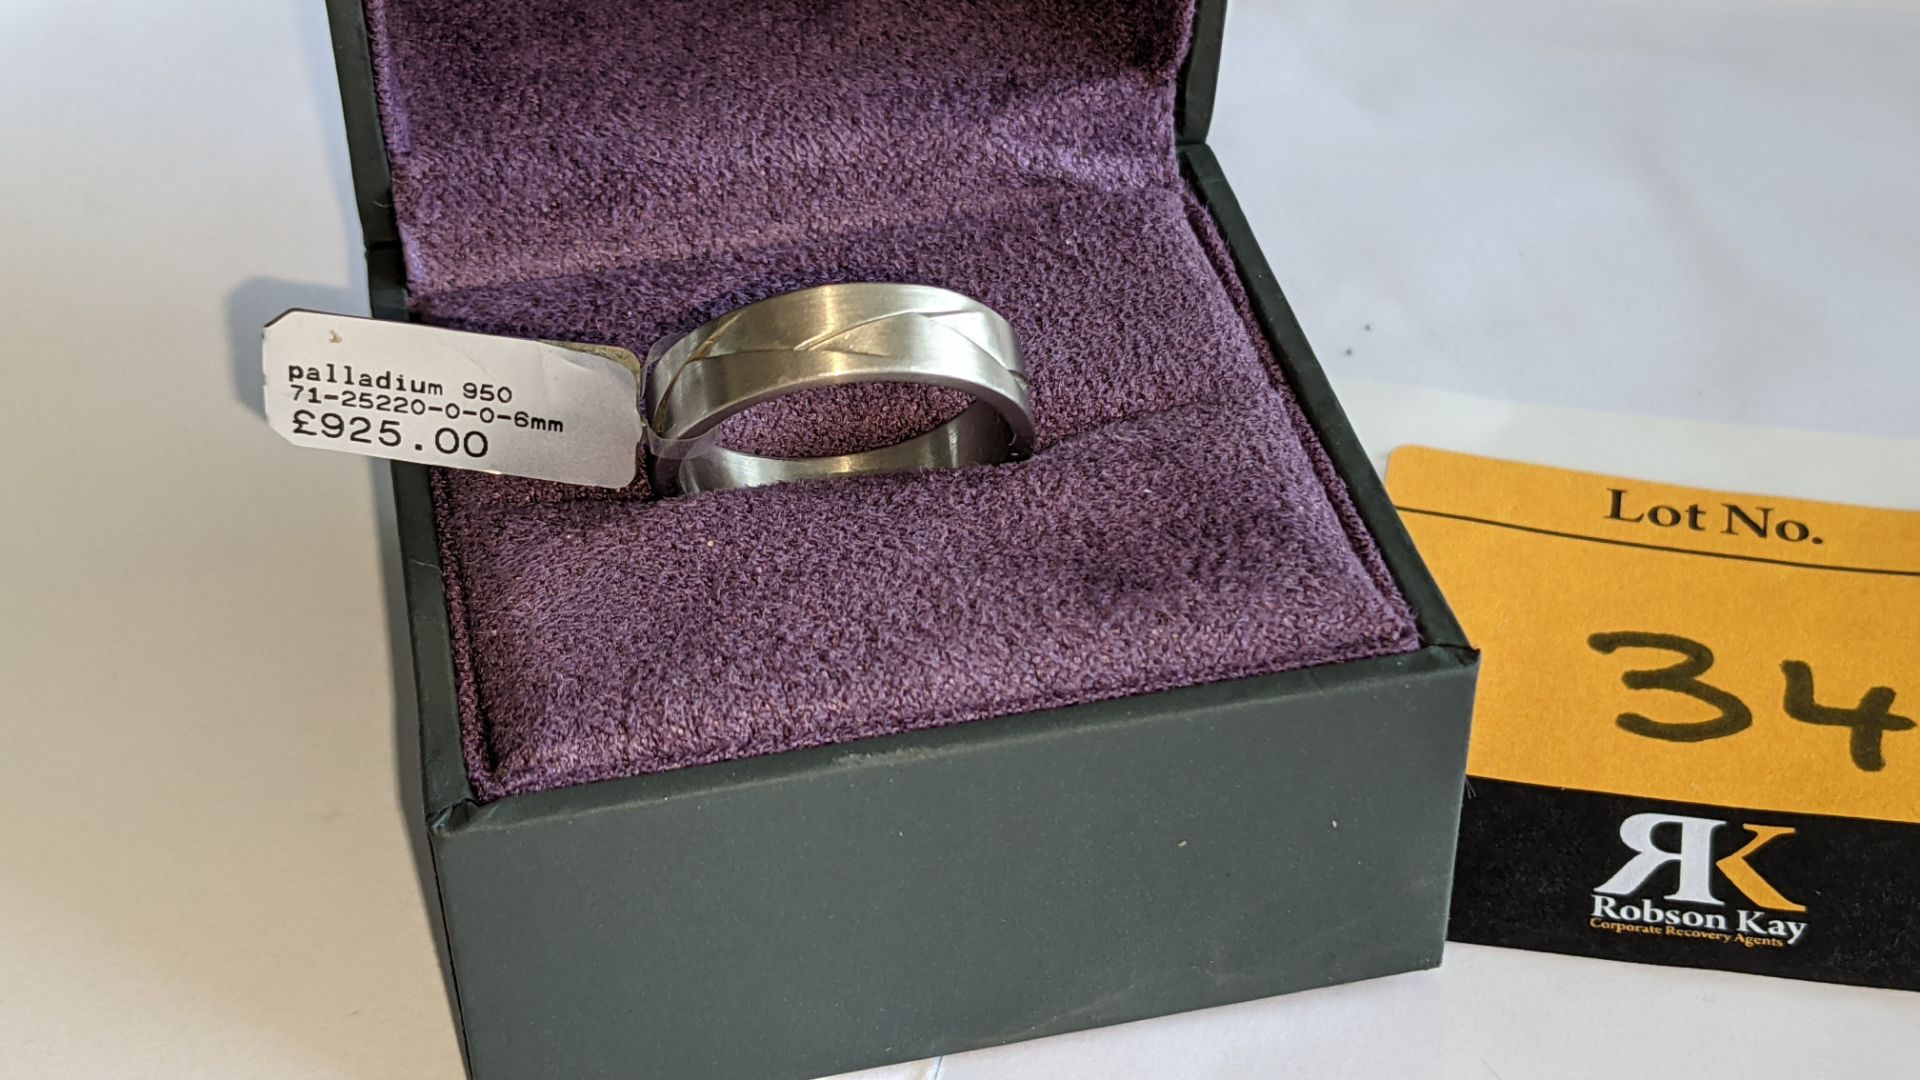 Palladium 950 6mm woven ring. RRP £925 - Image 2 of 14